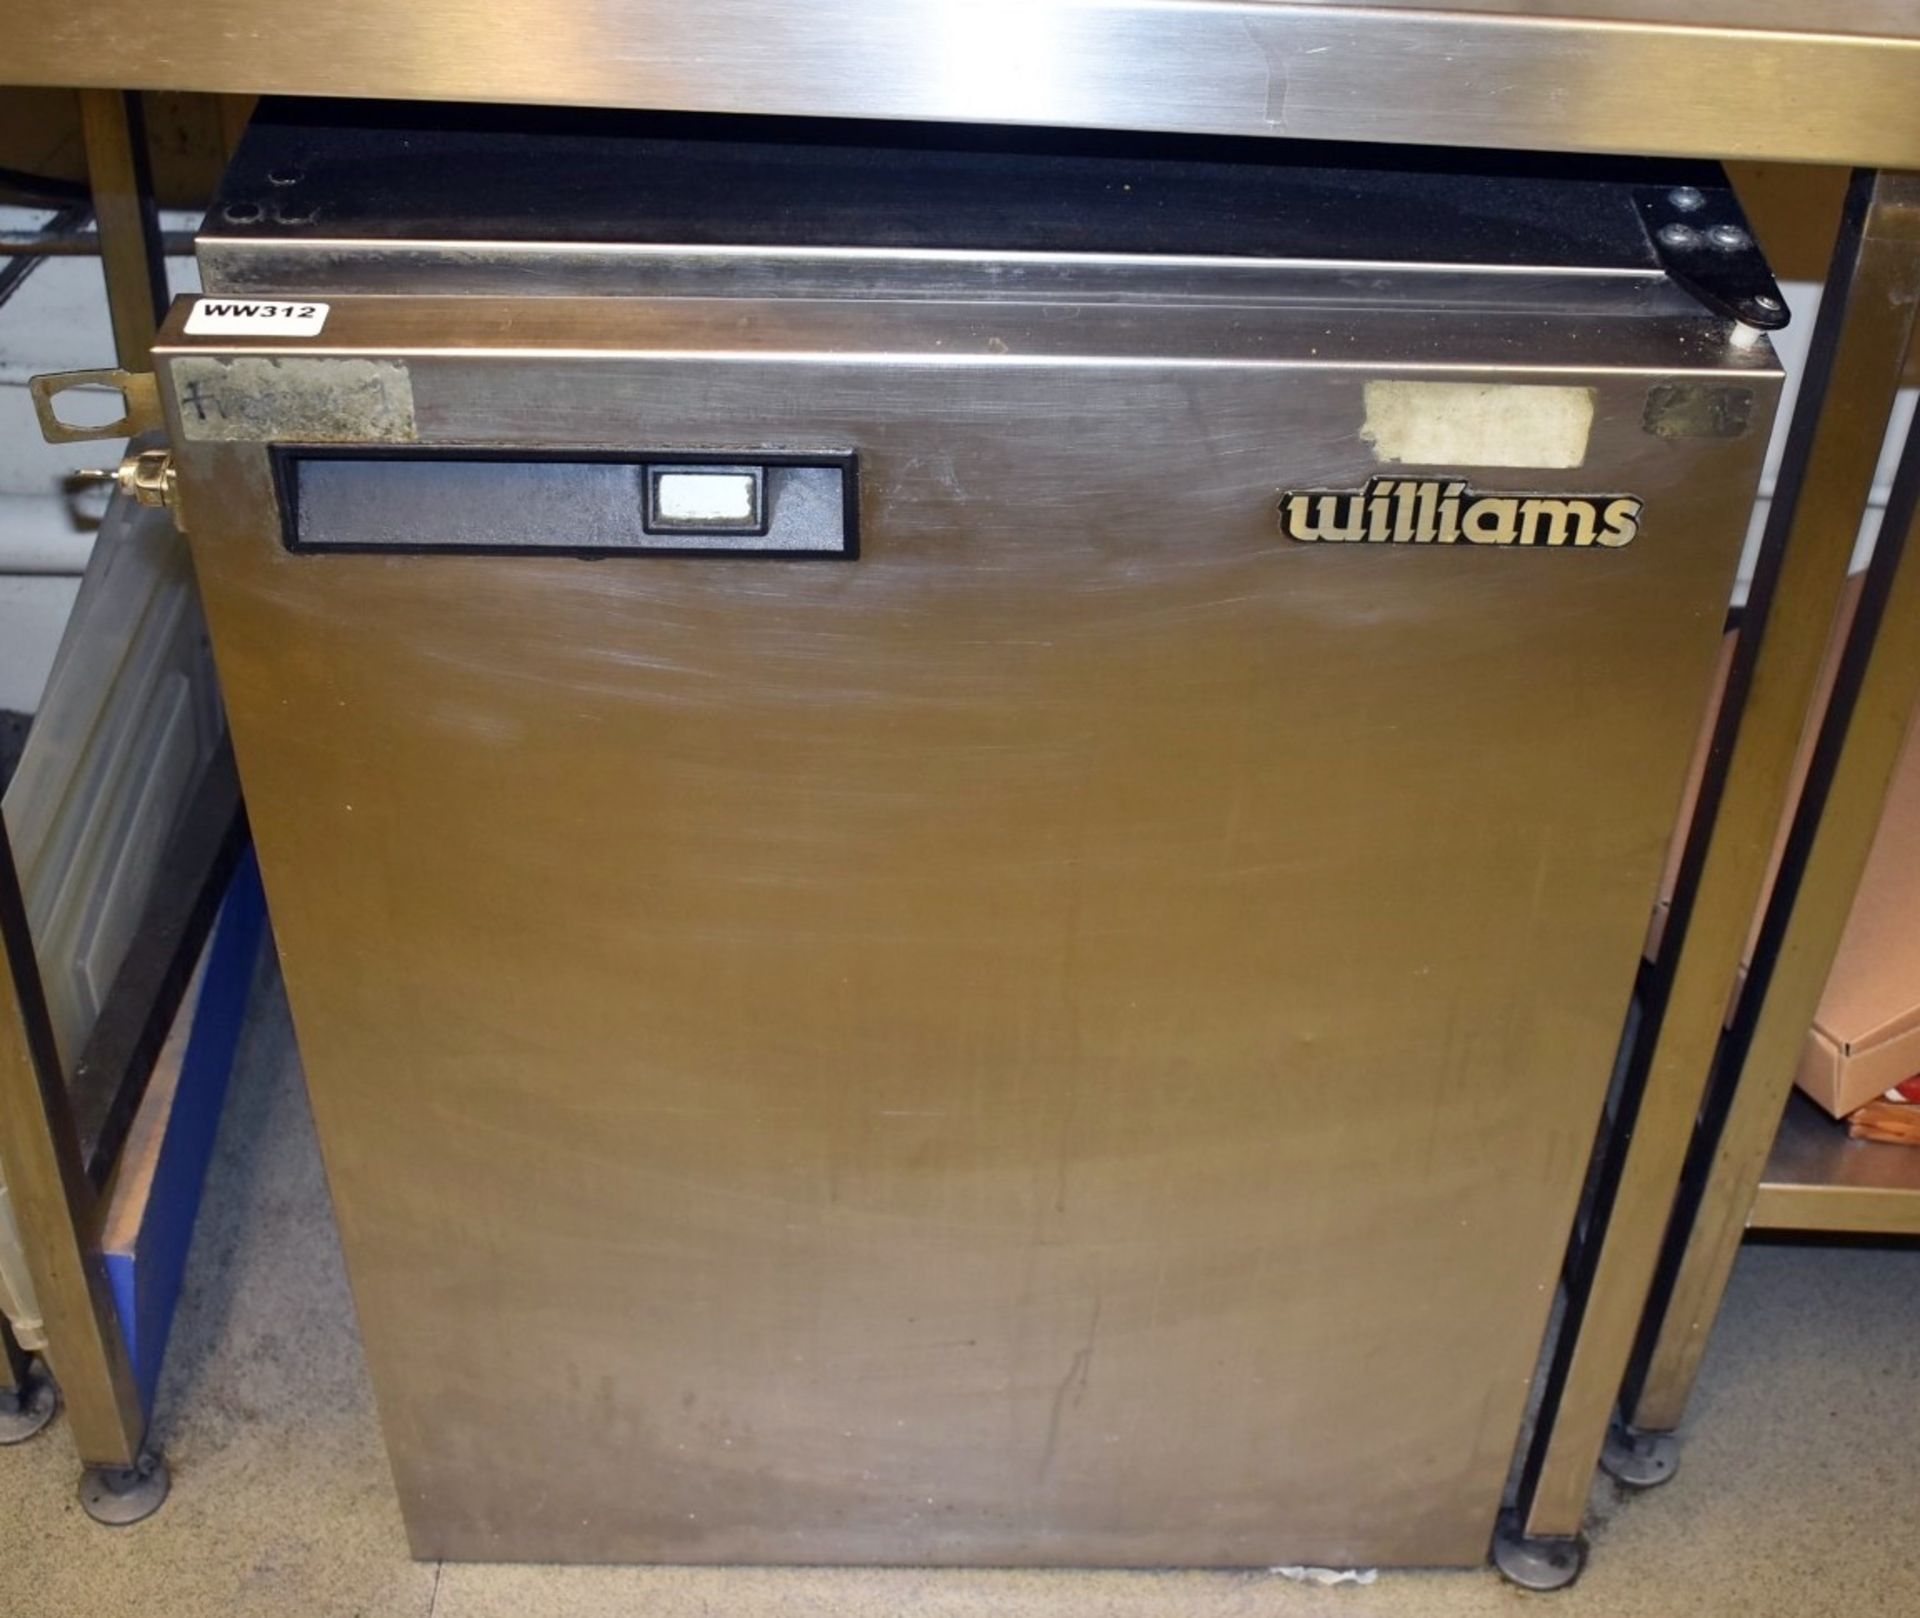 1 x Williams Undercounter Commercial Freezer - H82 x W65 x D65 cms - Ref WW313 - CL520 - Location: